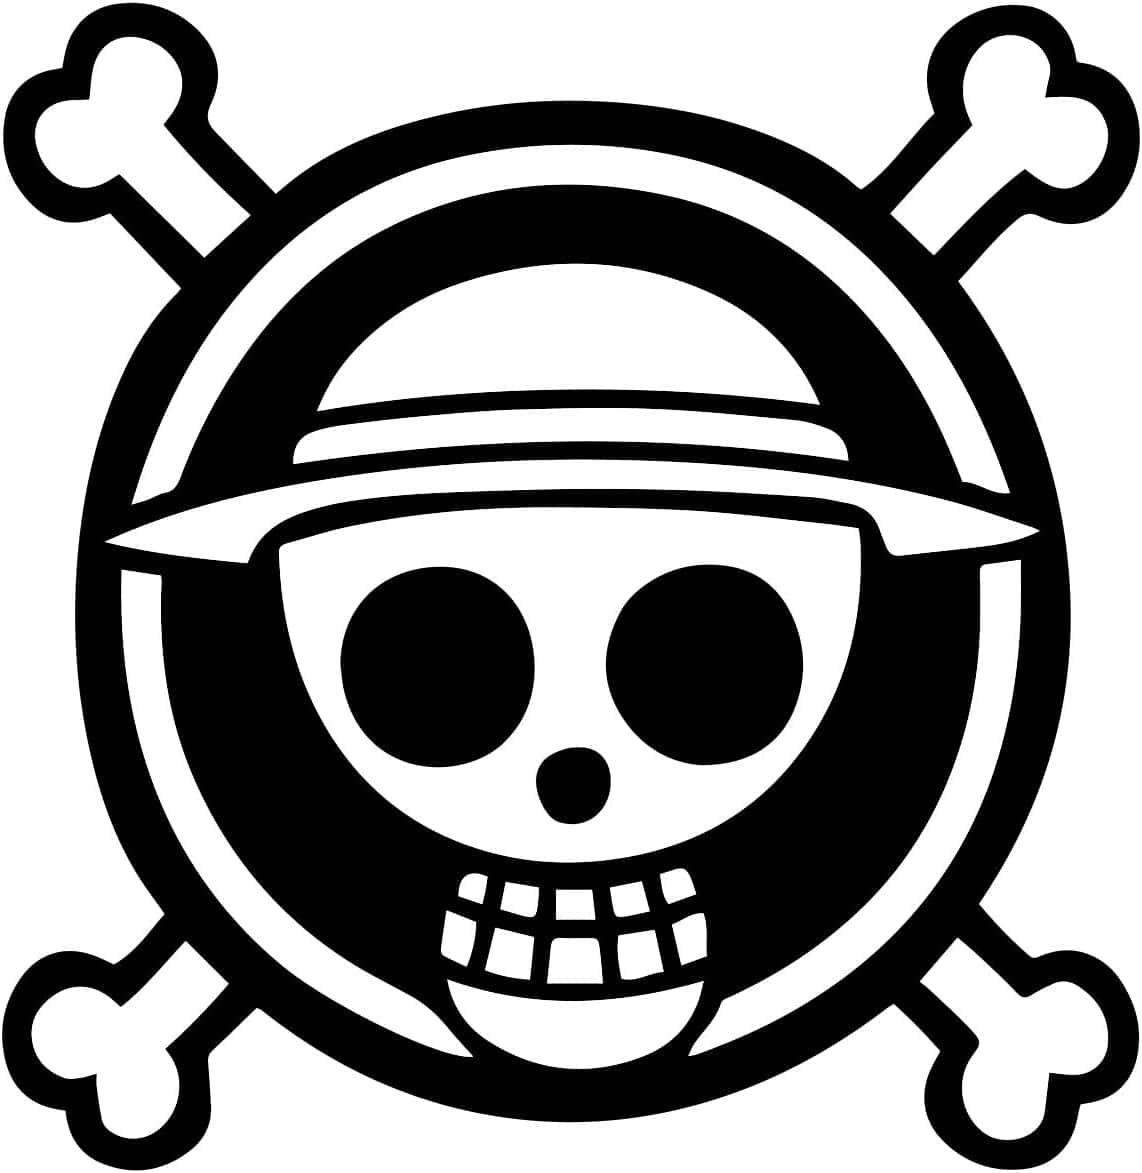 Enbild Av One Piece-logotypen Med Skelett Och Korsade Ben Som Bakgrundsbild På Datorn Eller Mobilen. Wallpaper